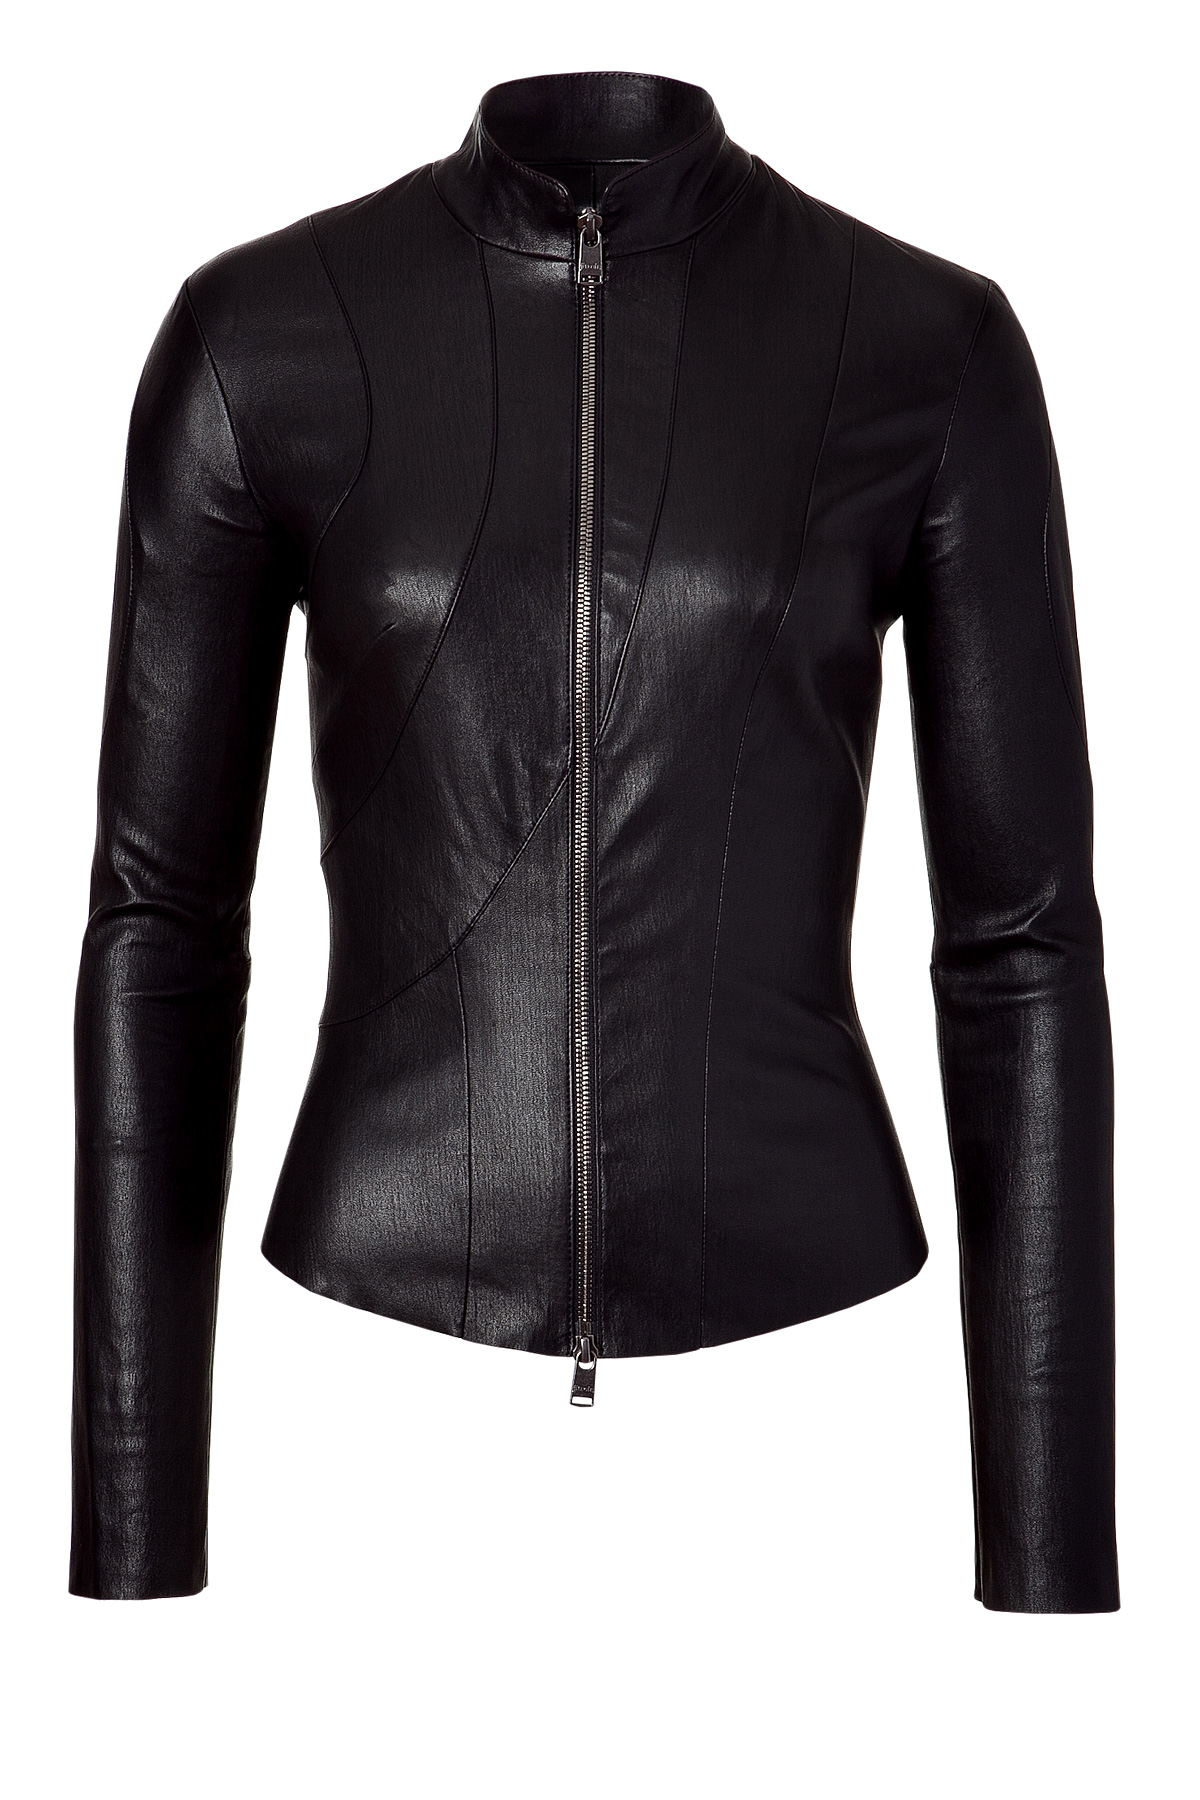 Jitrois Black Stretch Leather Jacket in Black | Lyst